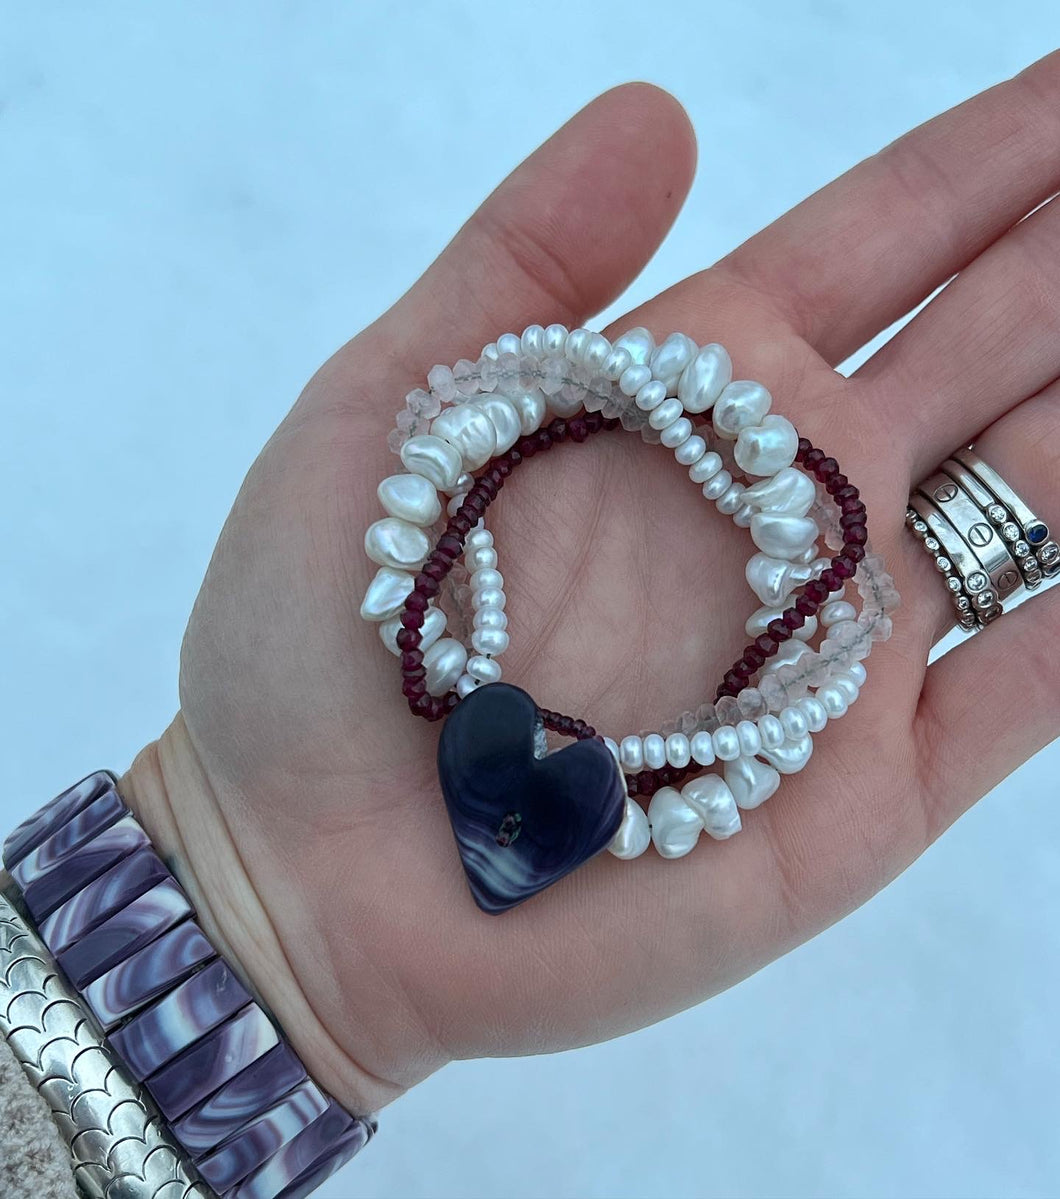 Pearl and precious stone bracelets